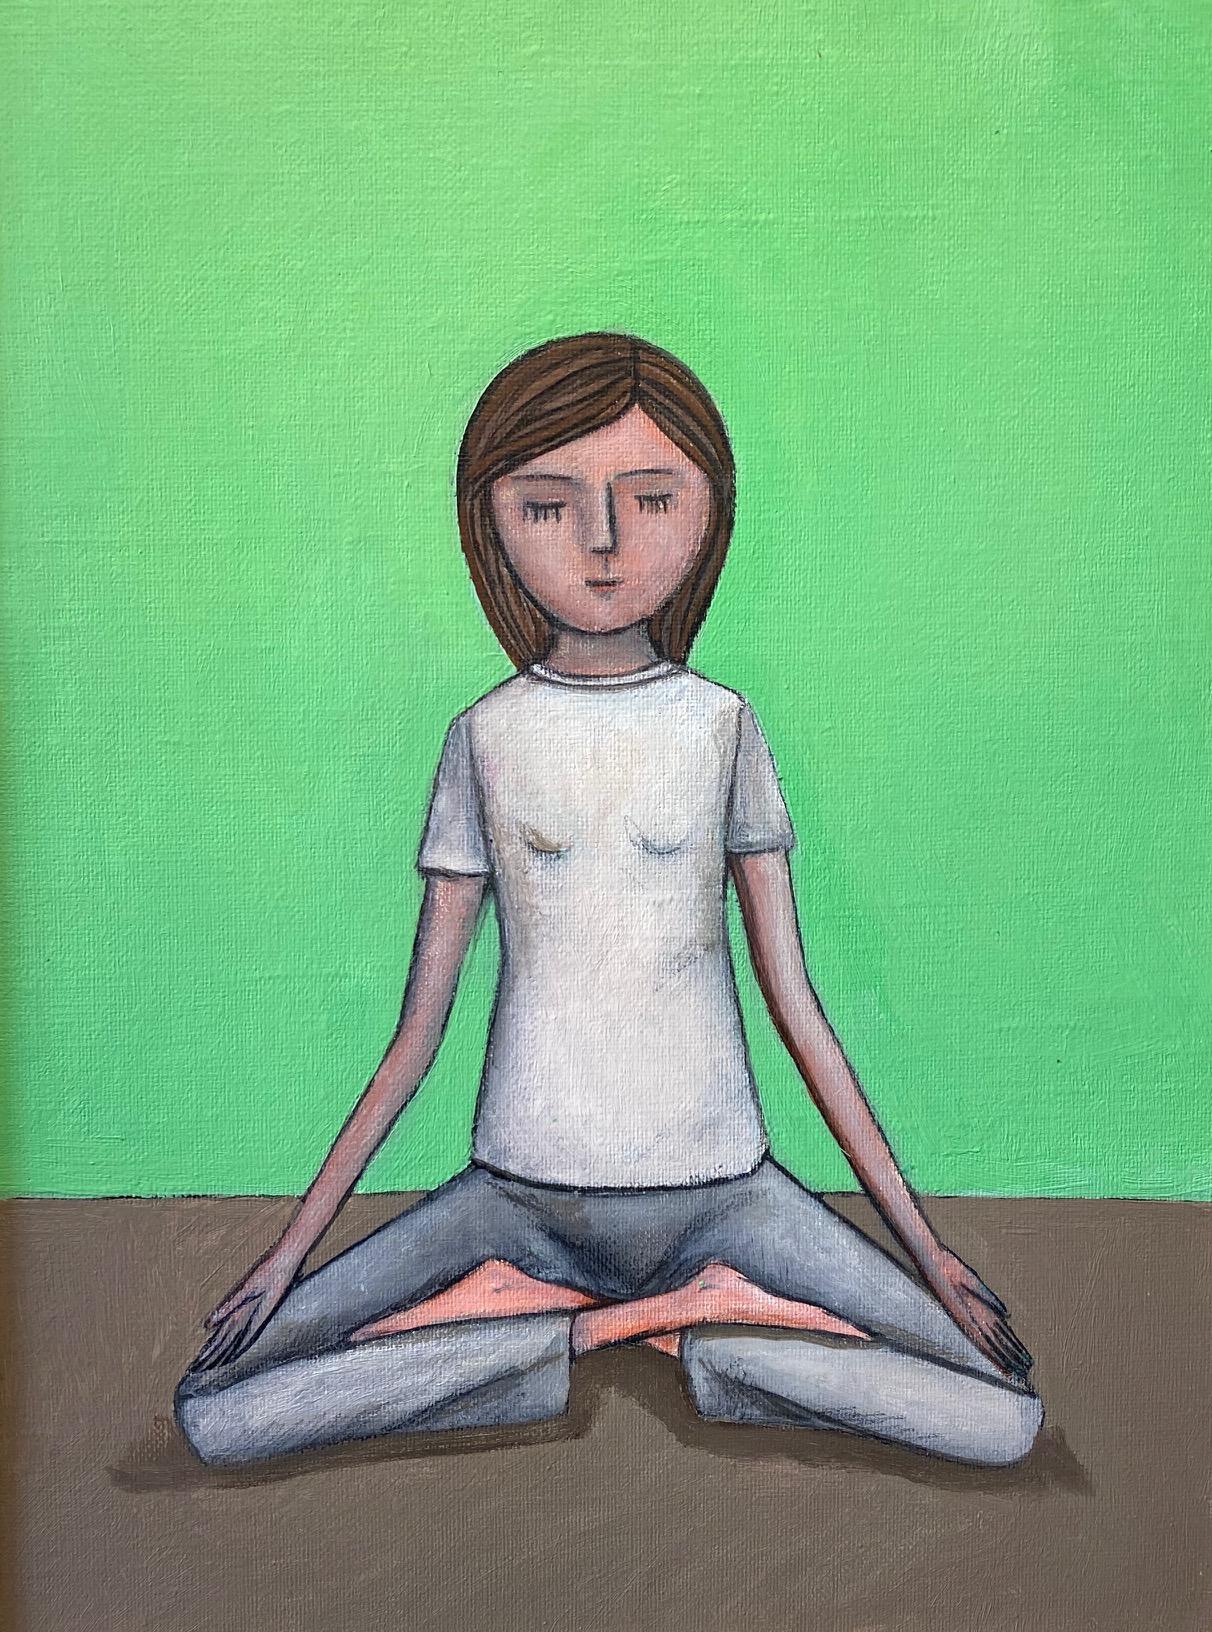 Giacomo Piussi Figurative Painting - Yoga Girl, Florence, Italy, 2020